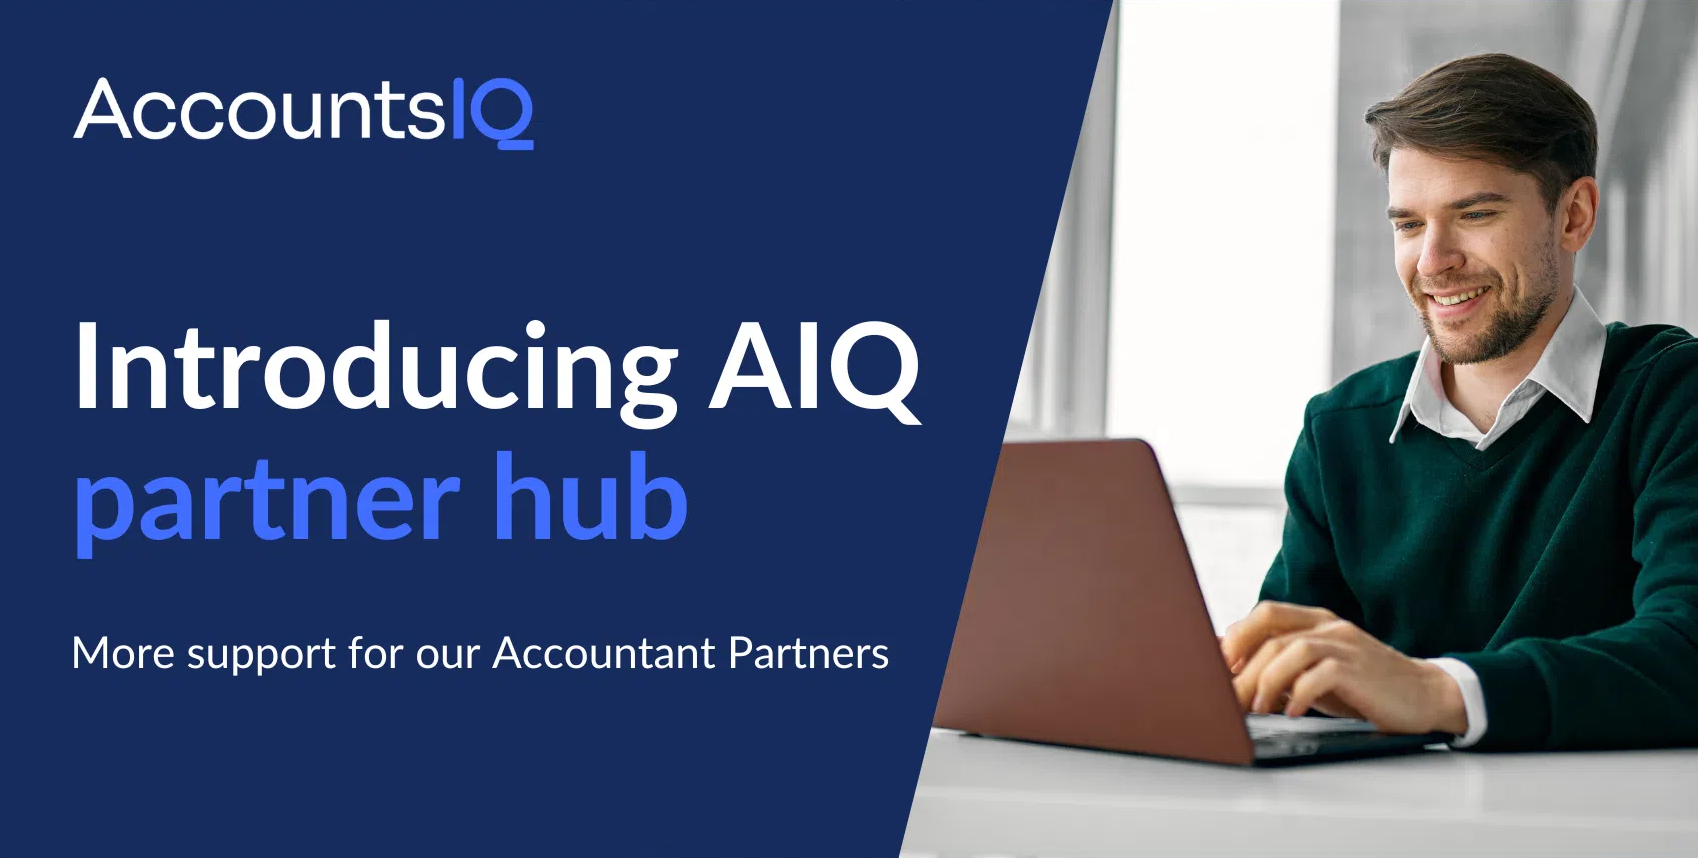 New: Partner Hub for Accountants from AccountsIQ image